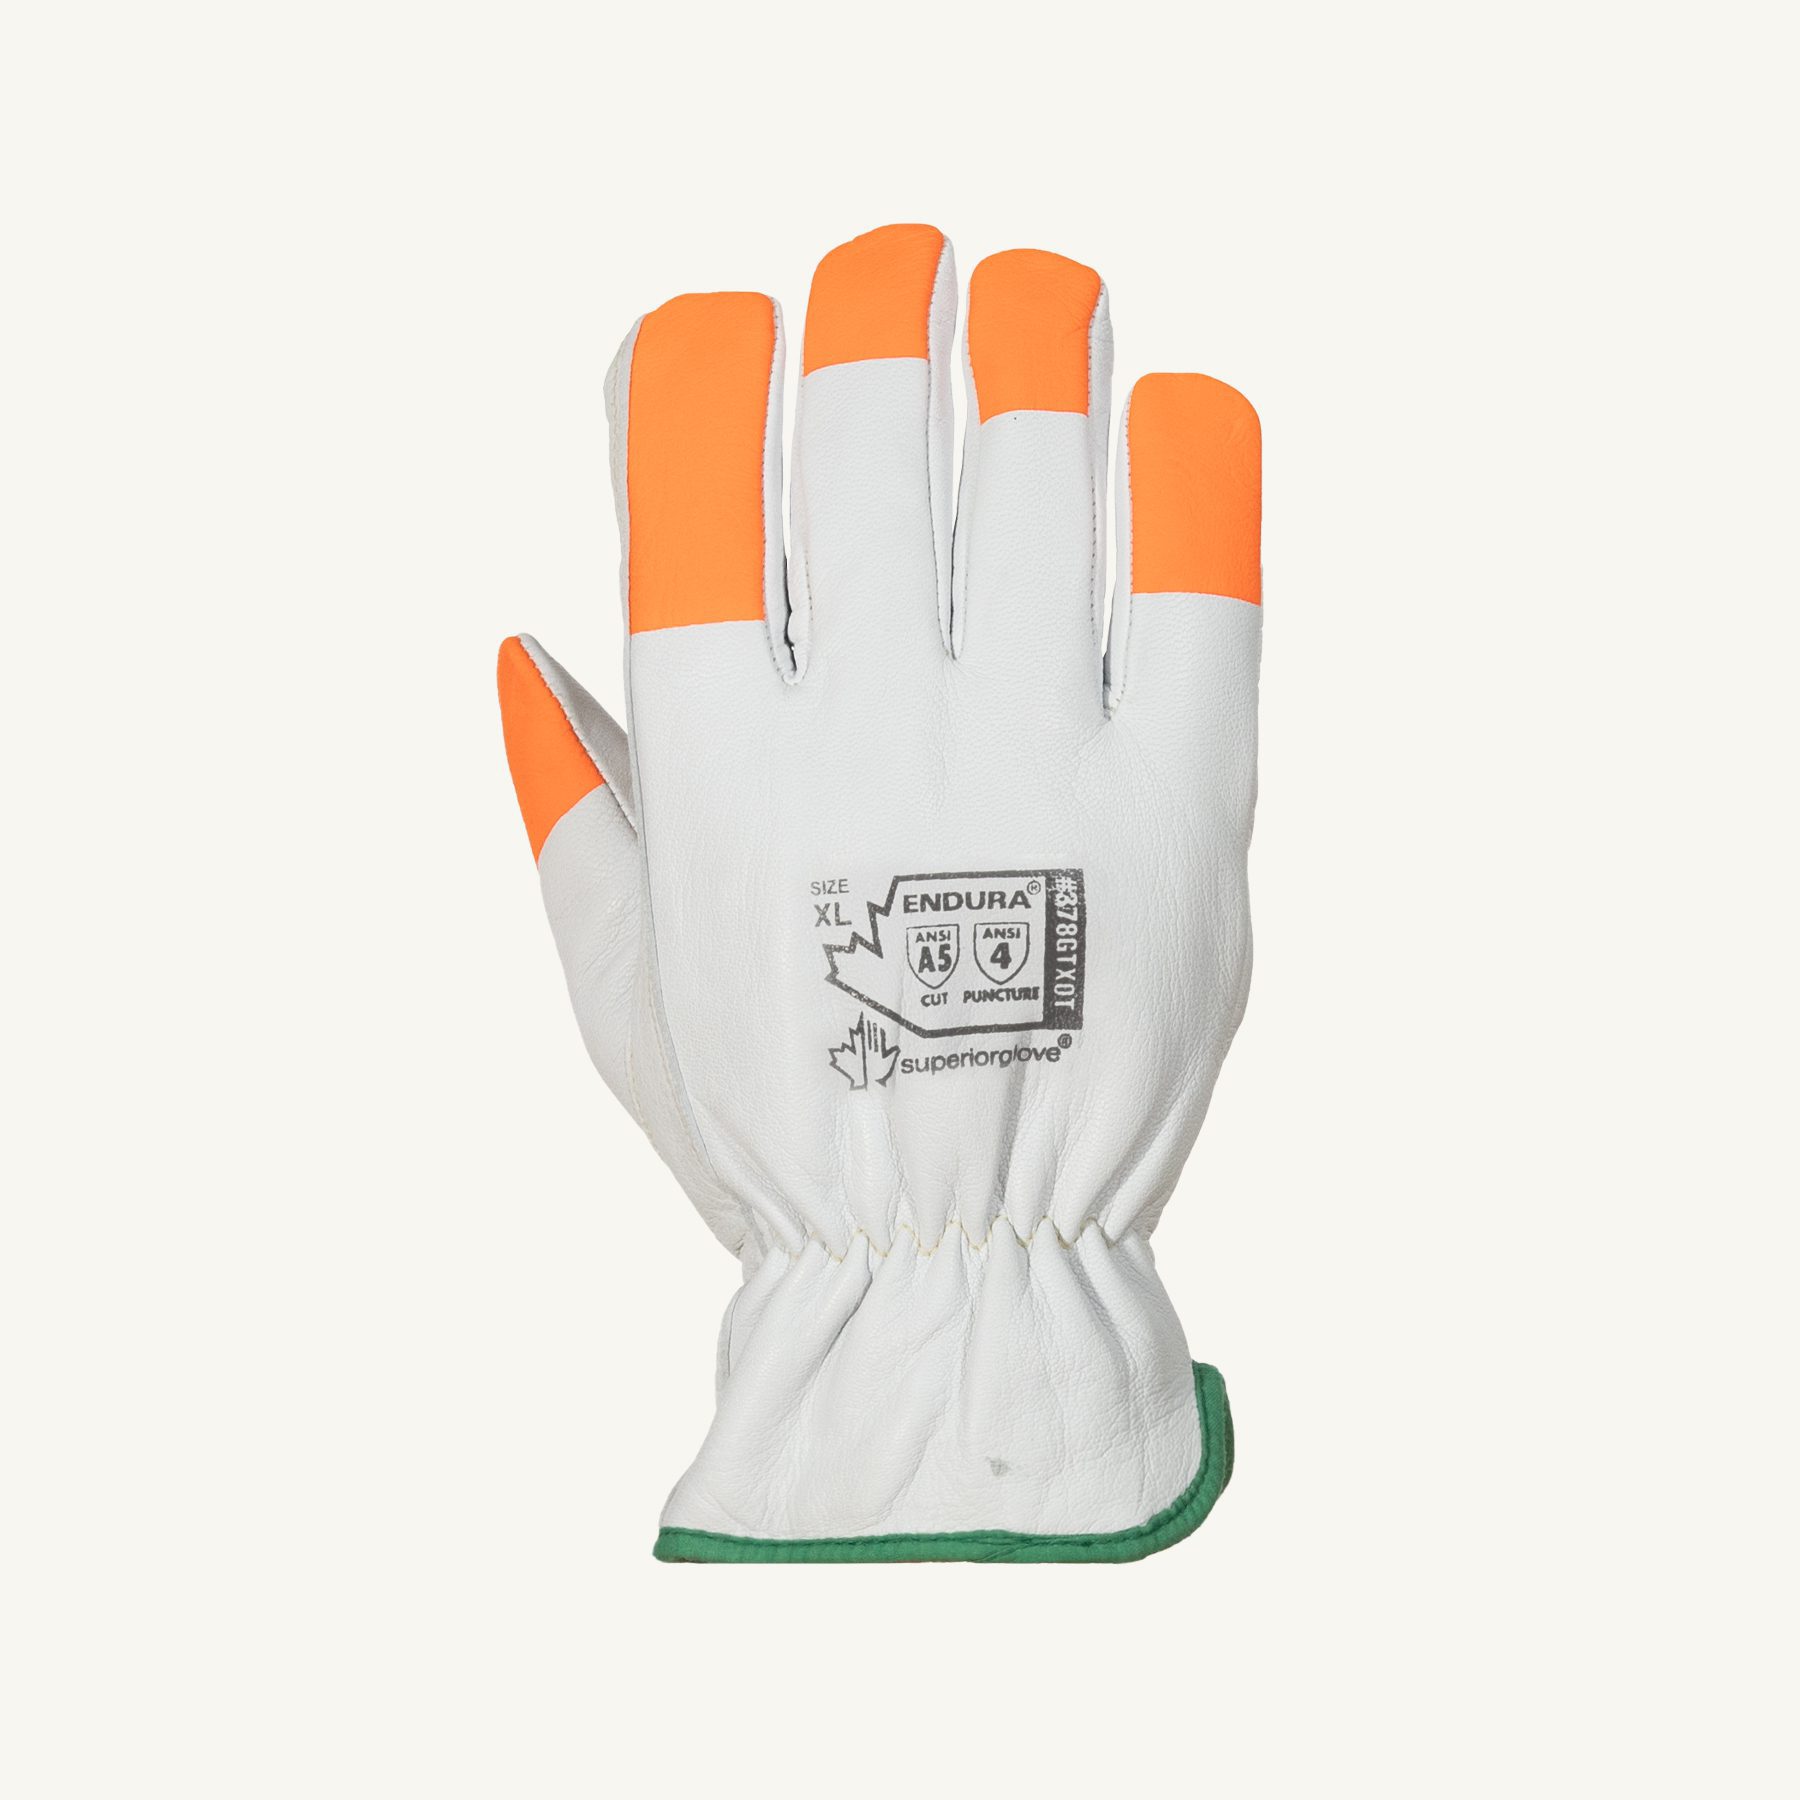 Superior Endura Goat-Grain Driver Gloves with Hi-Vis Orange Finger Tips - Trusted Gear Company LLC